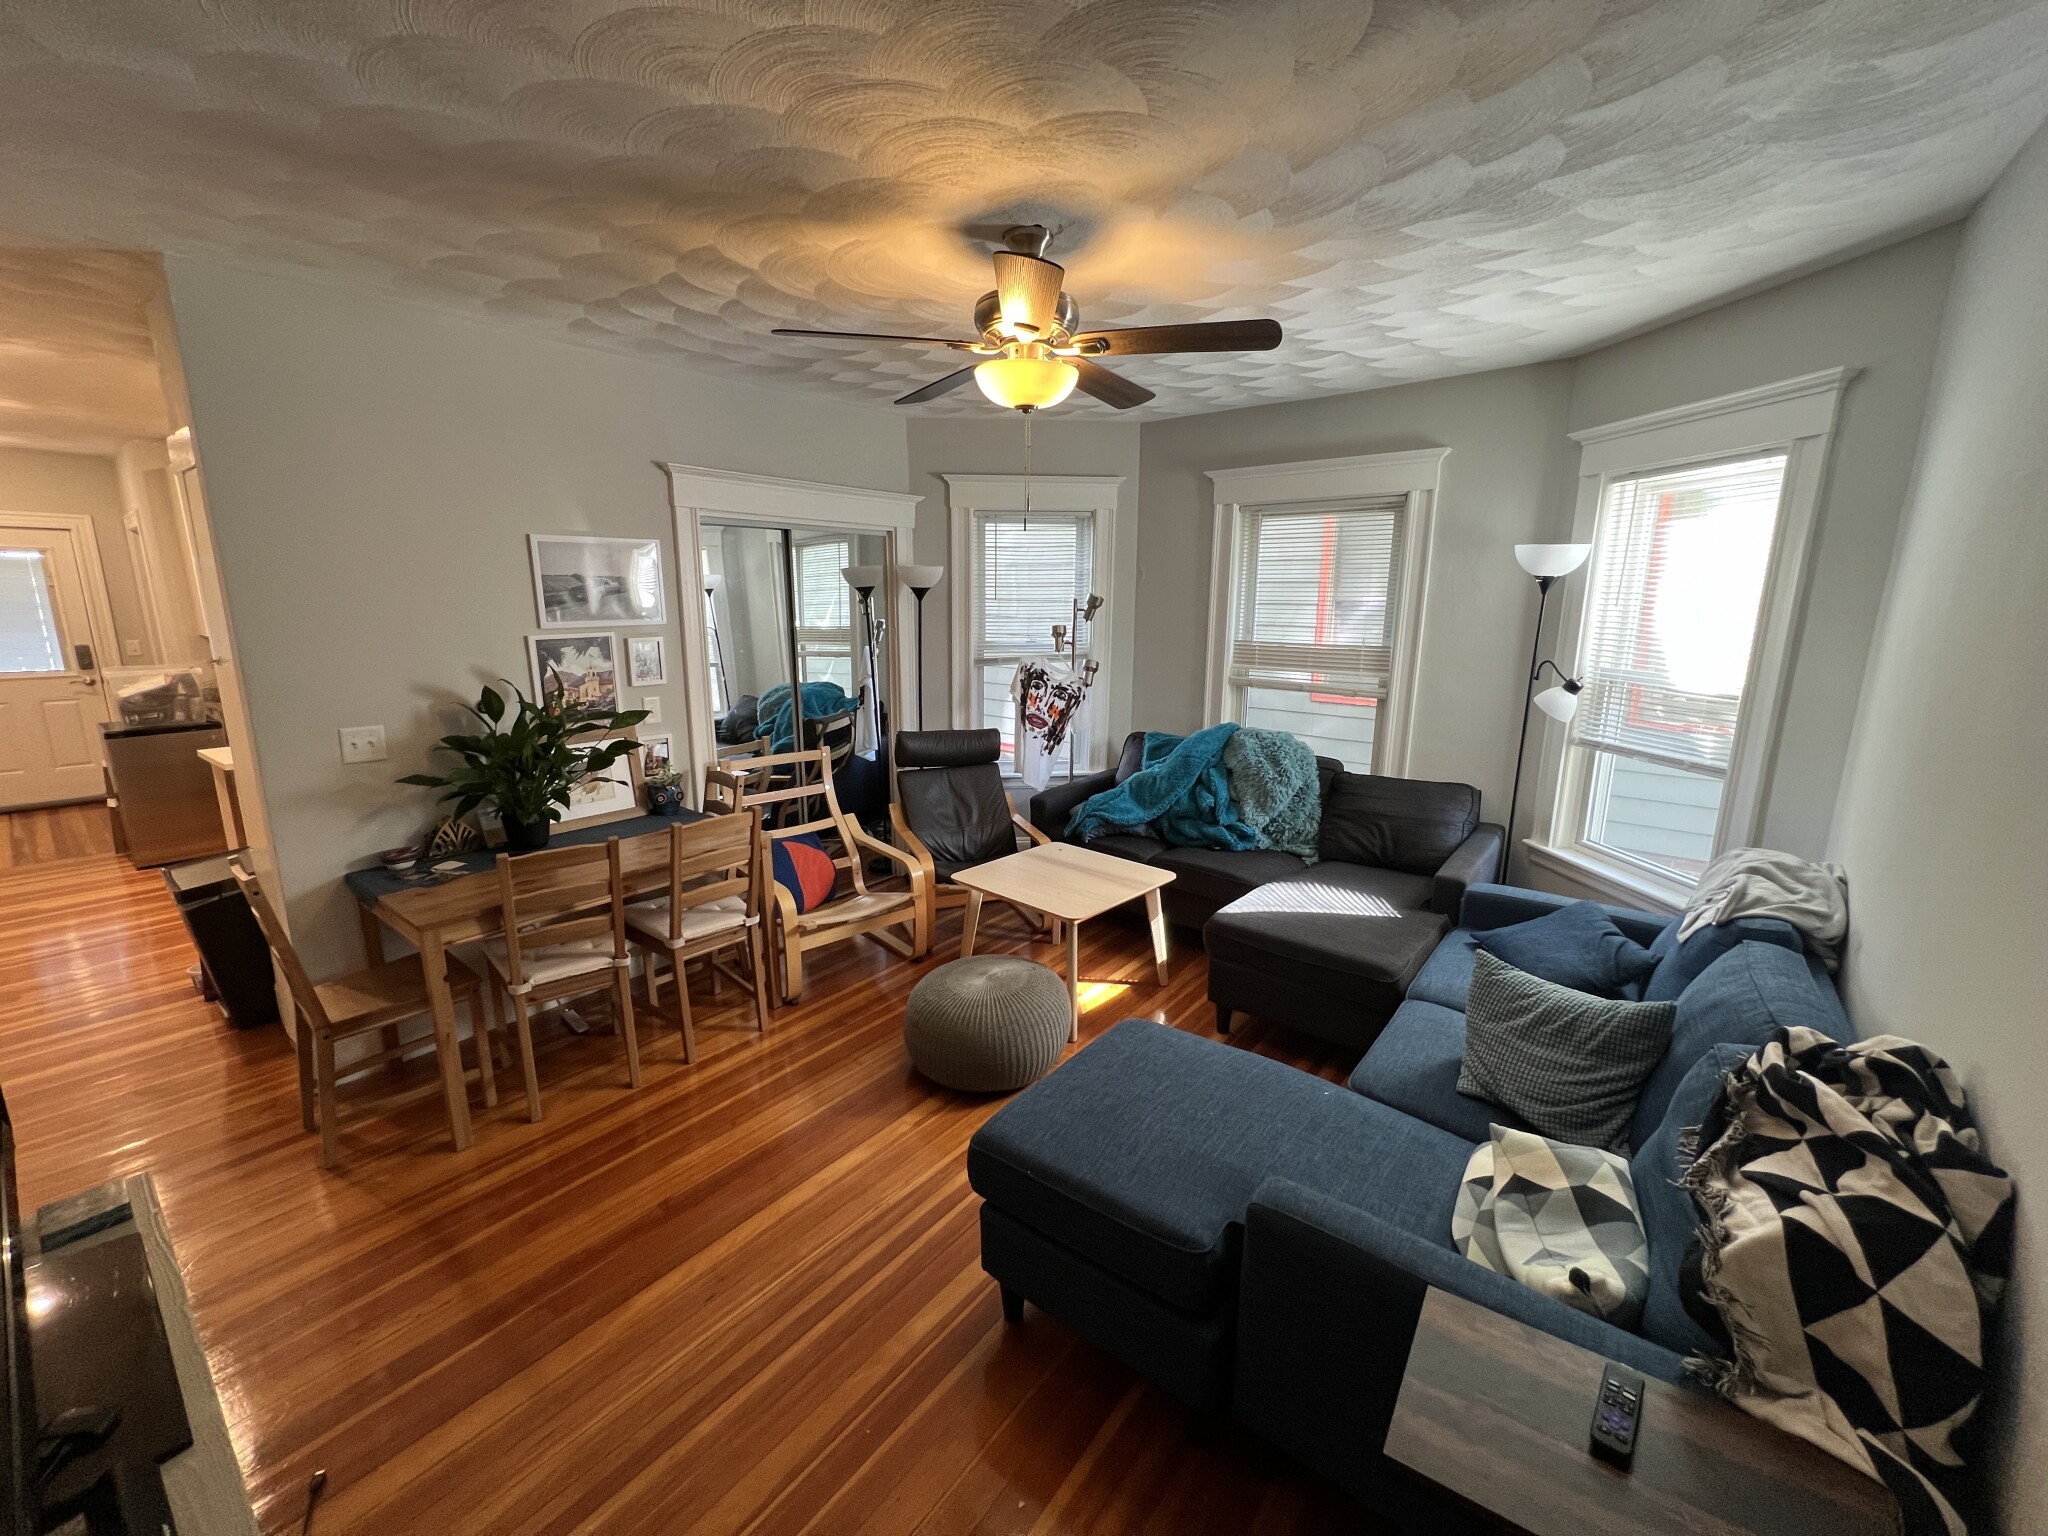 Photos of apartment on Powder House Blvd.,Somerville MA 02144